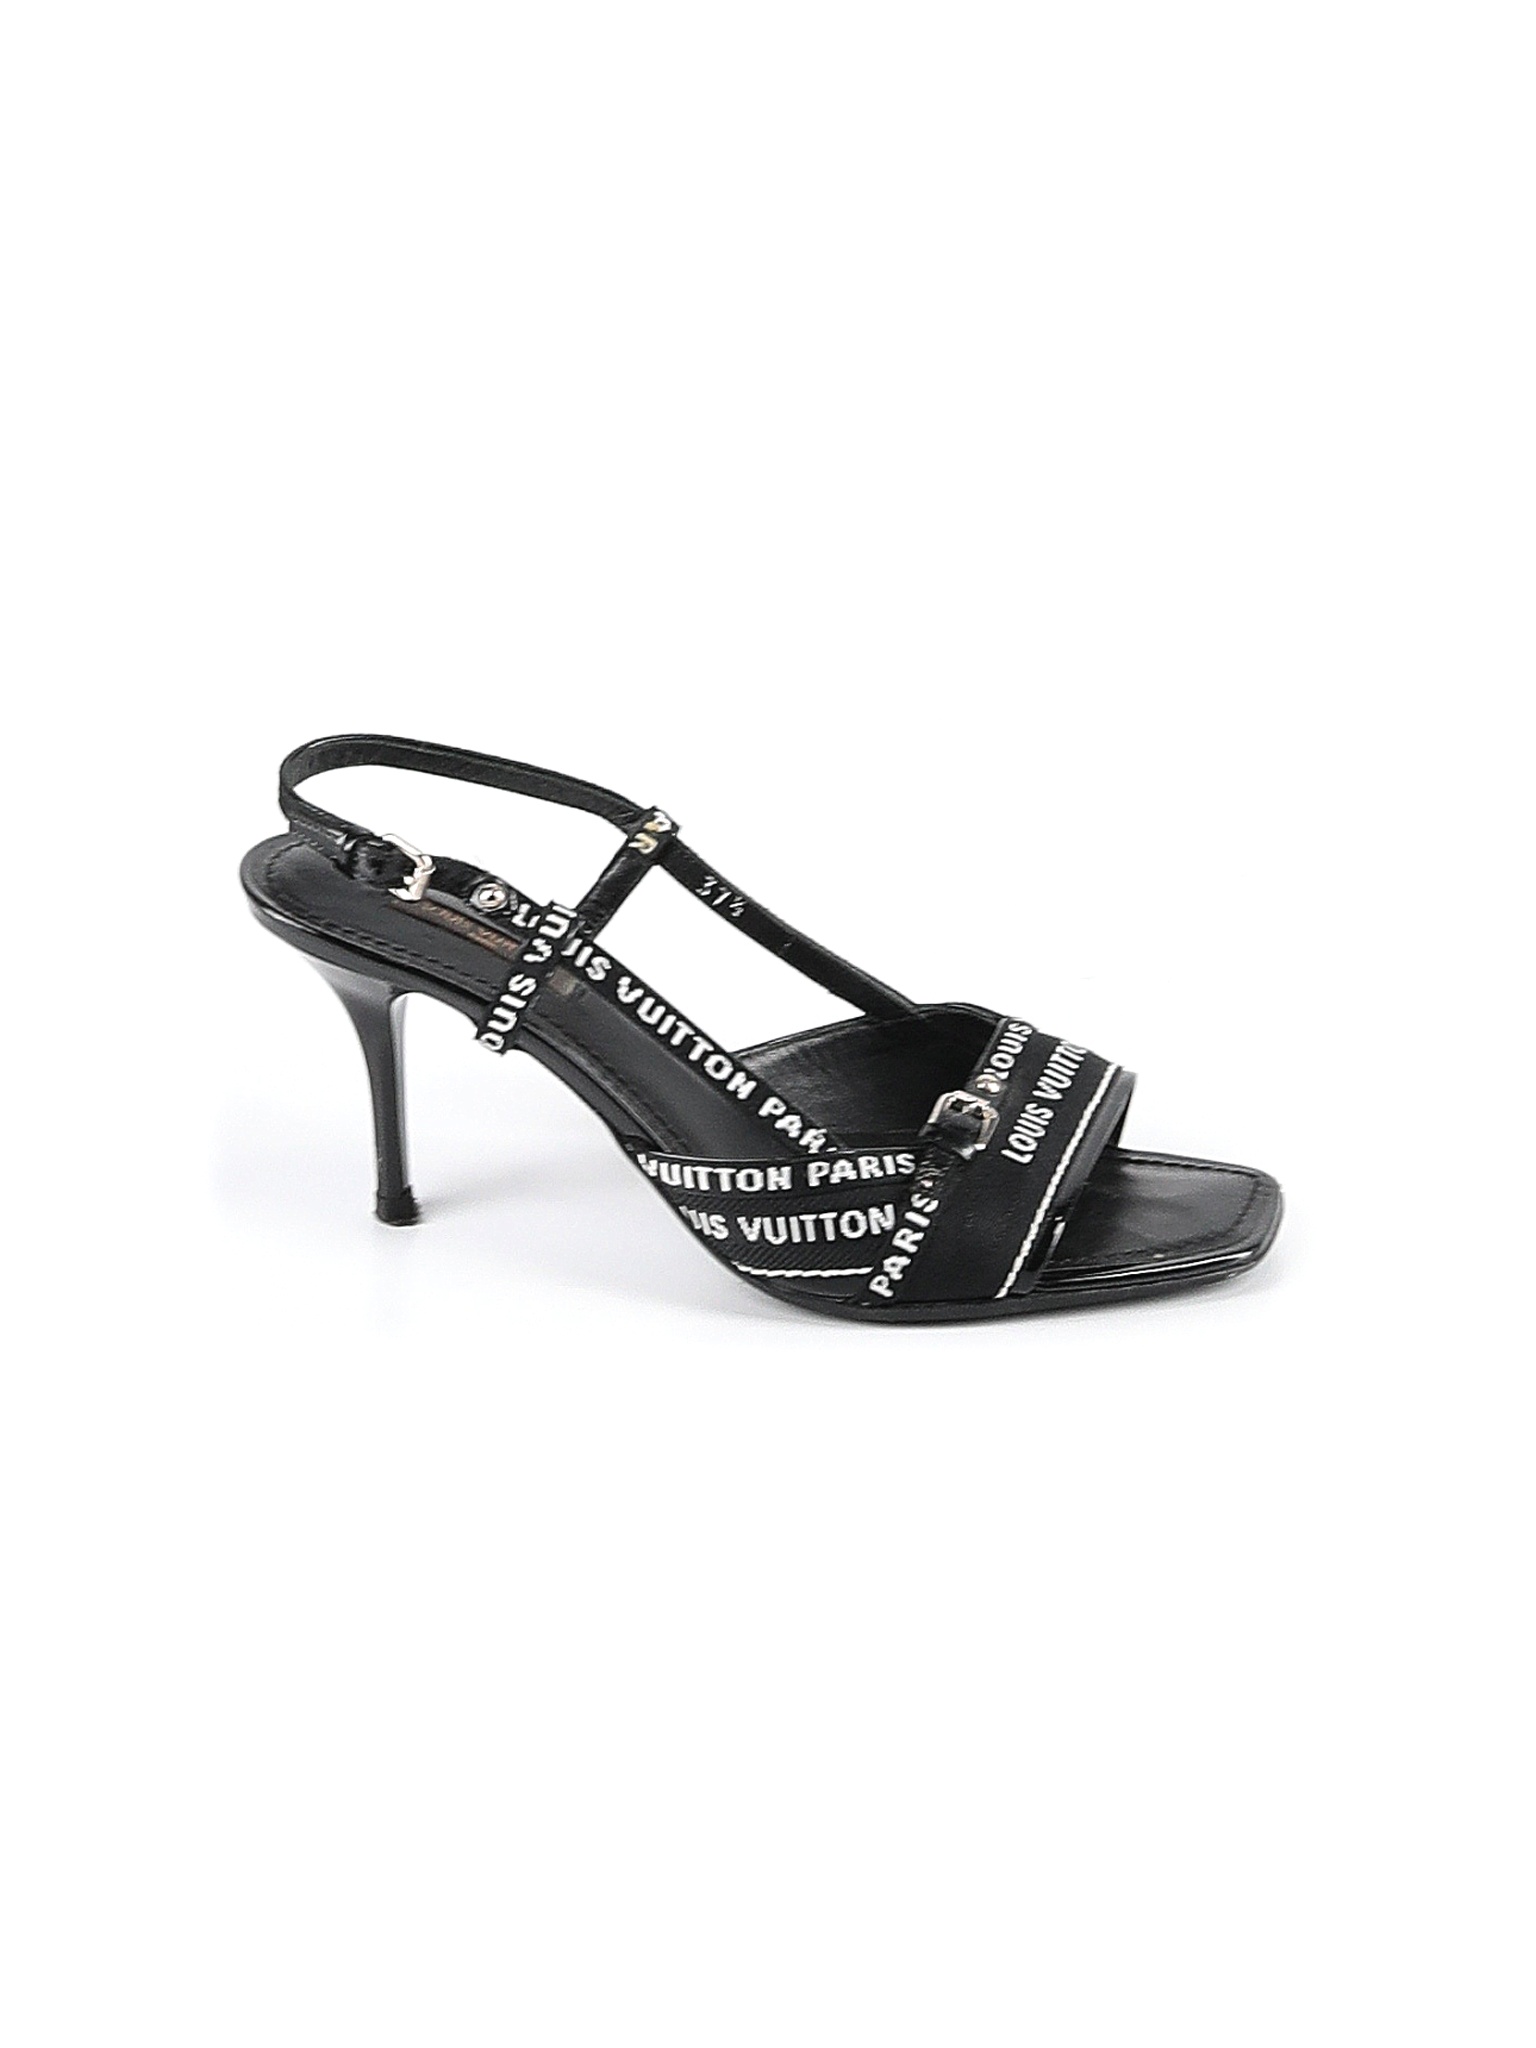 Louis Vuitton Women Black Heels EUR 37.5 | eBay